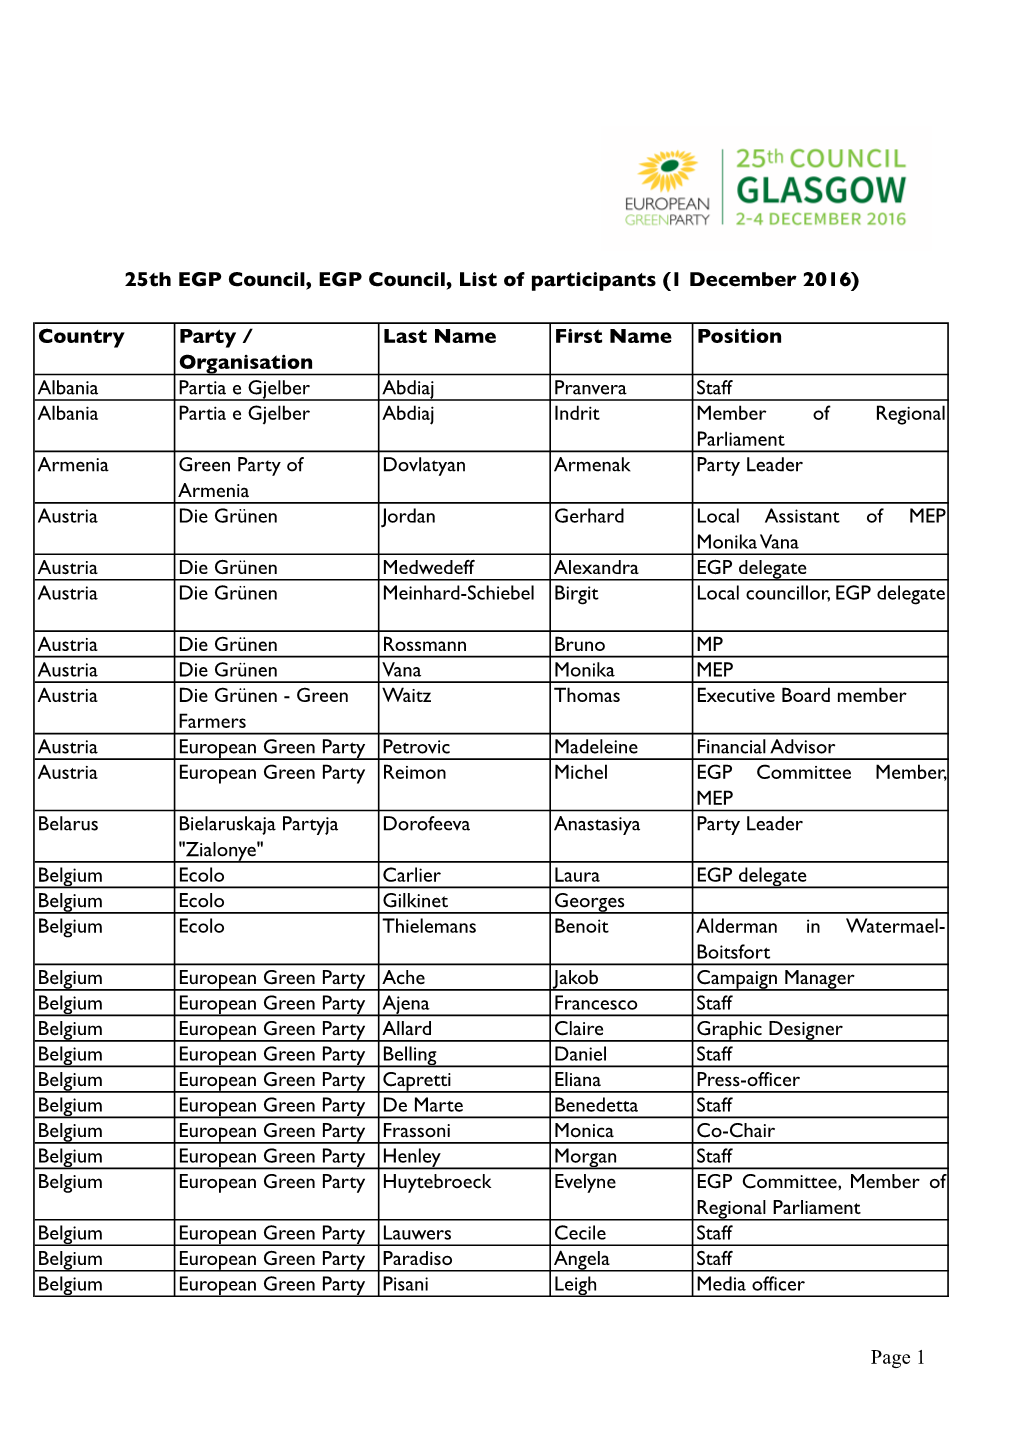 List of Registered Participants 1 Dec 2016